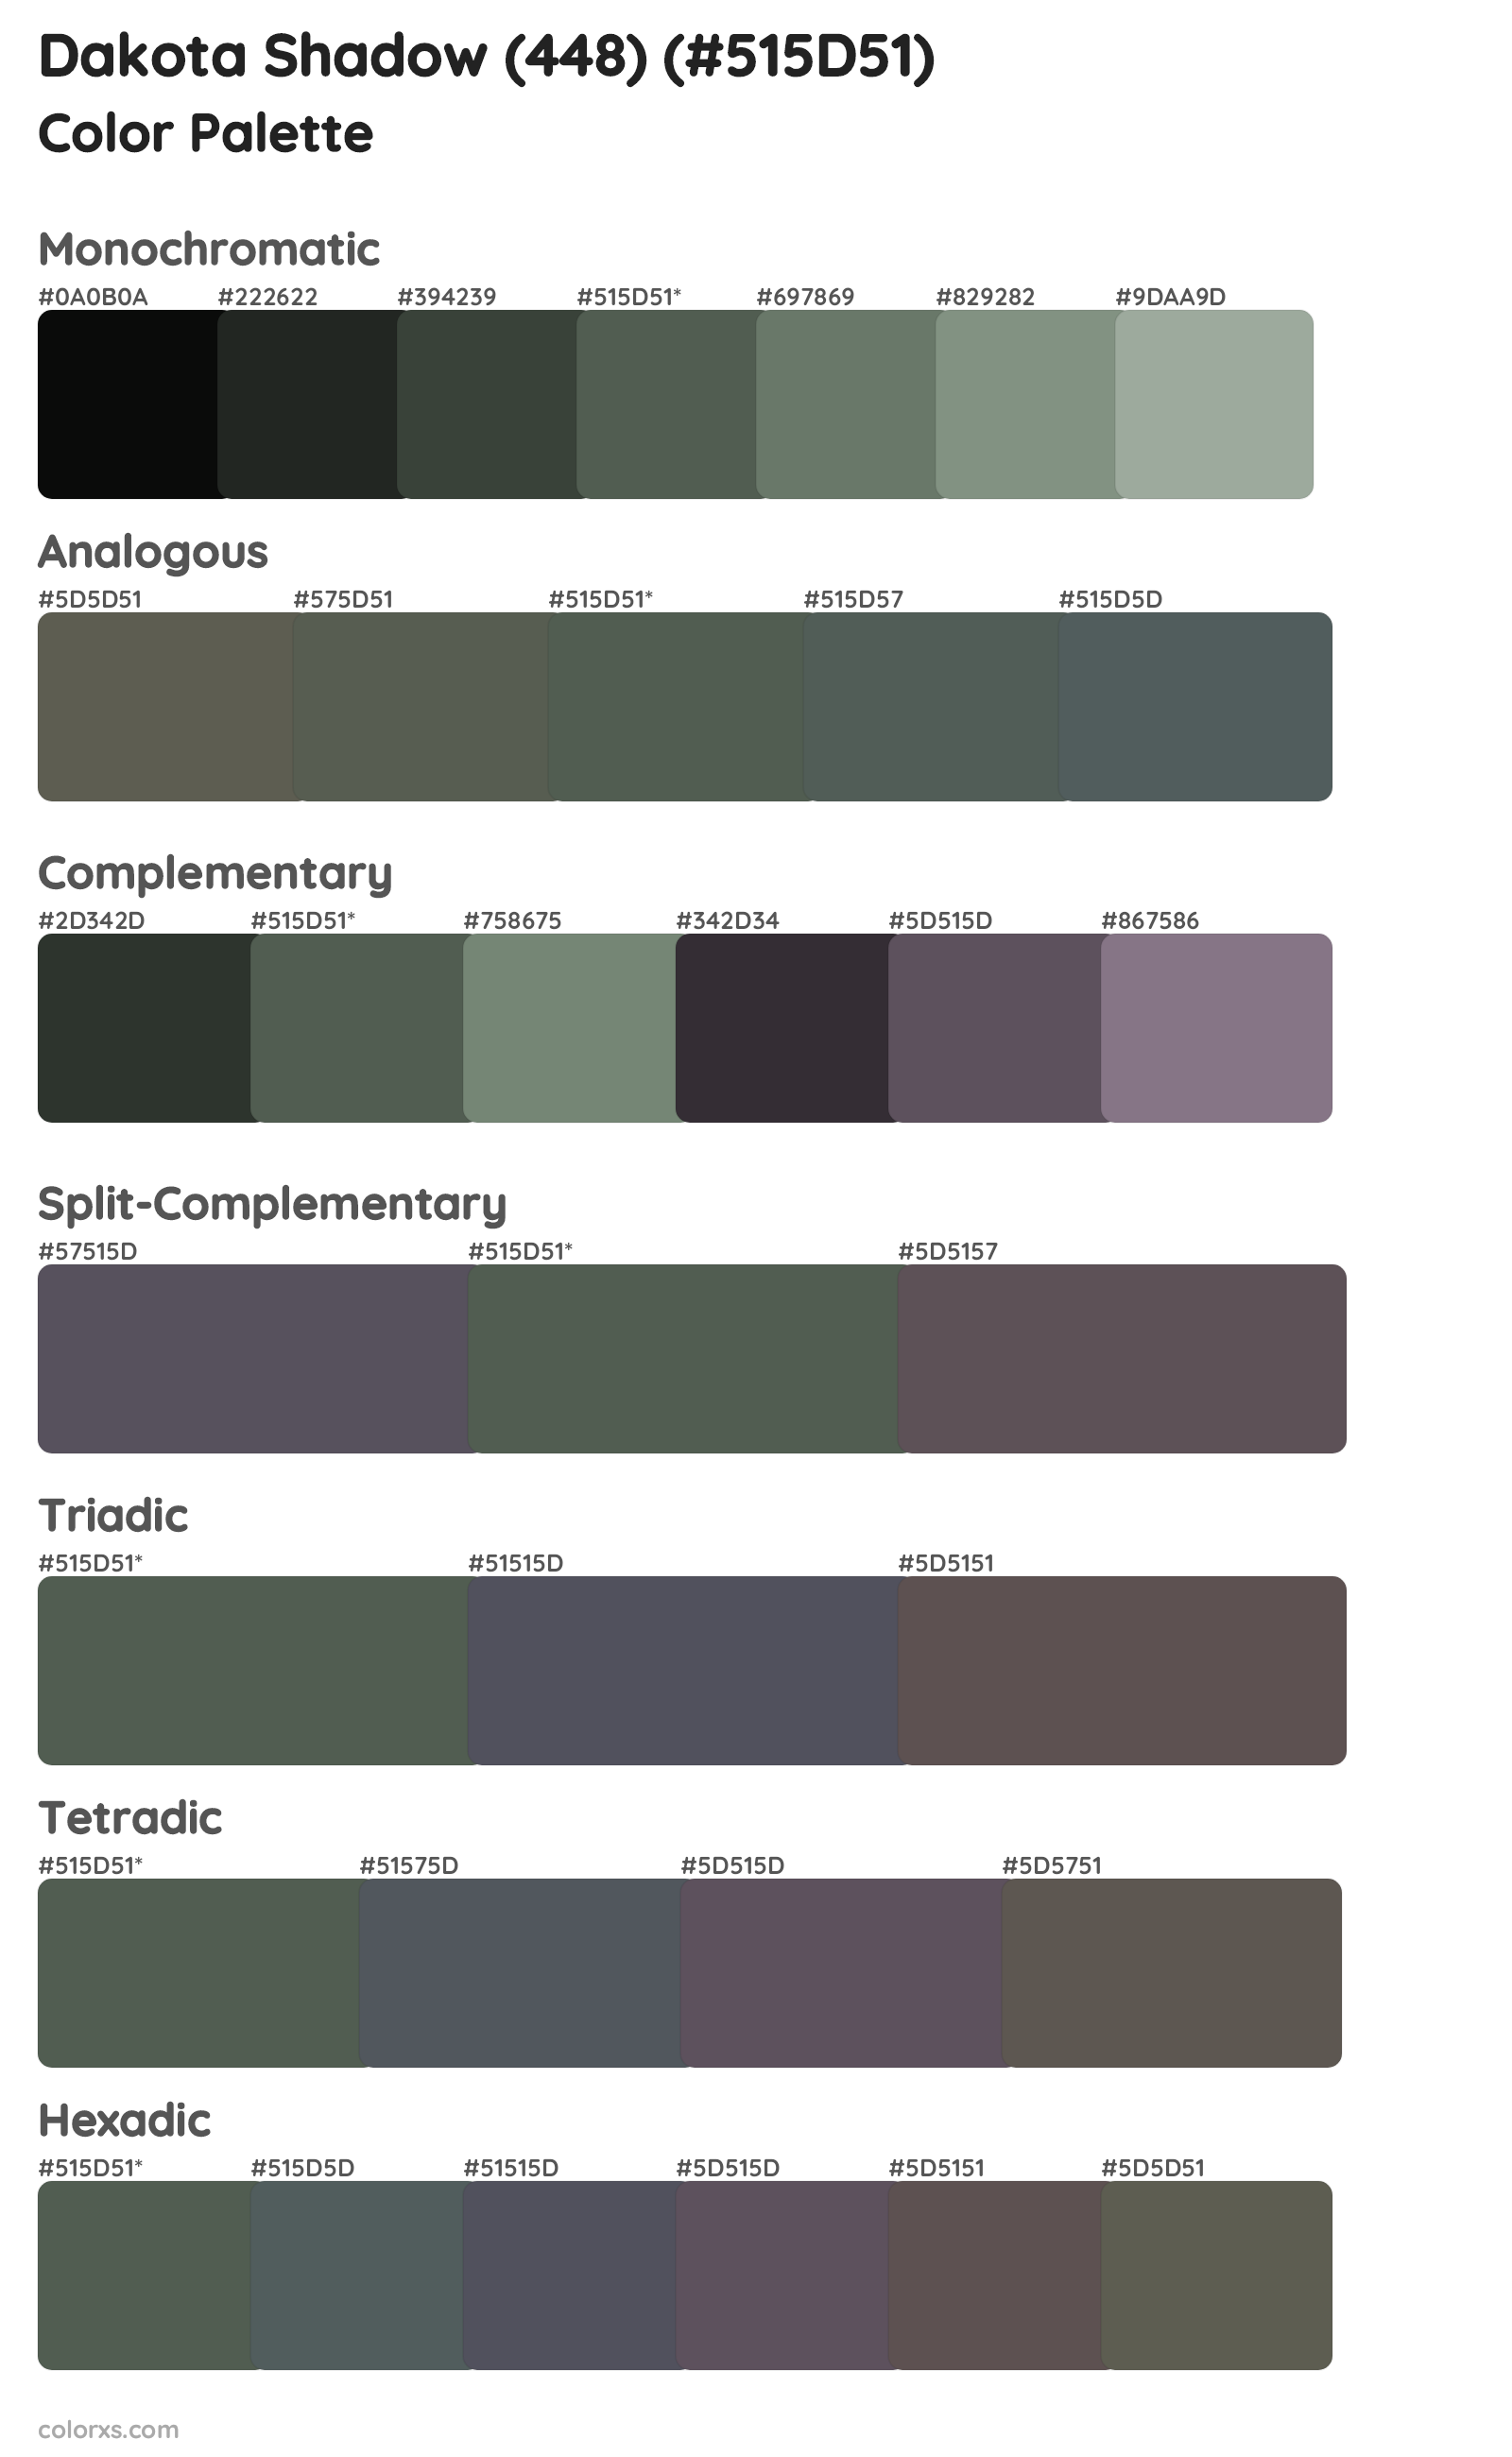 Dakota Shadow (448) Color Scheme Palettes